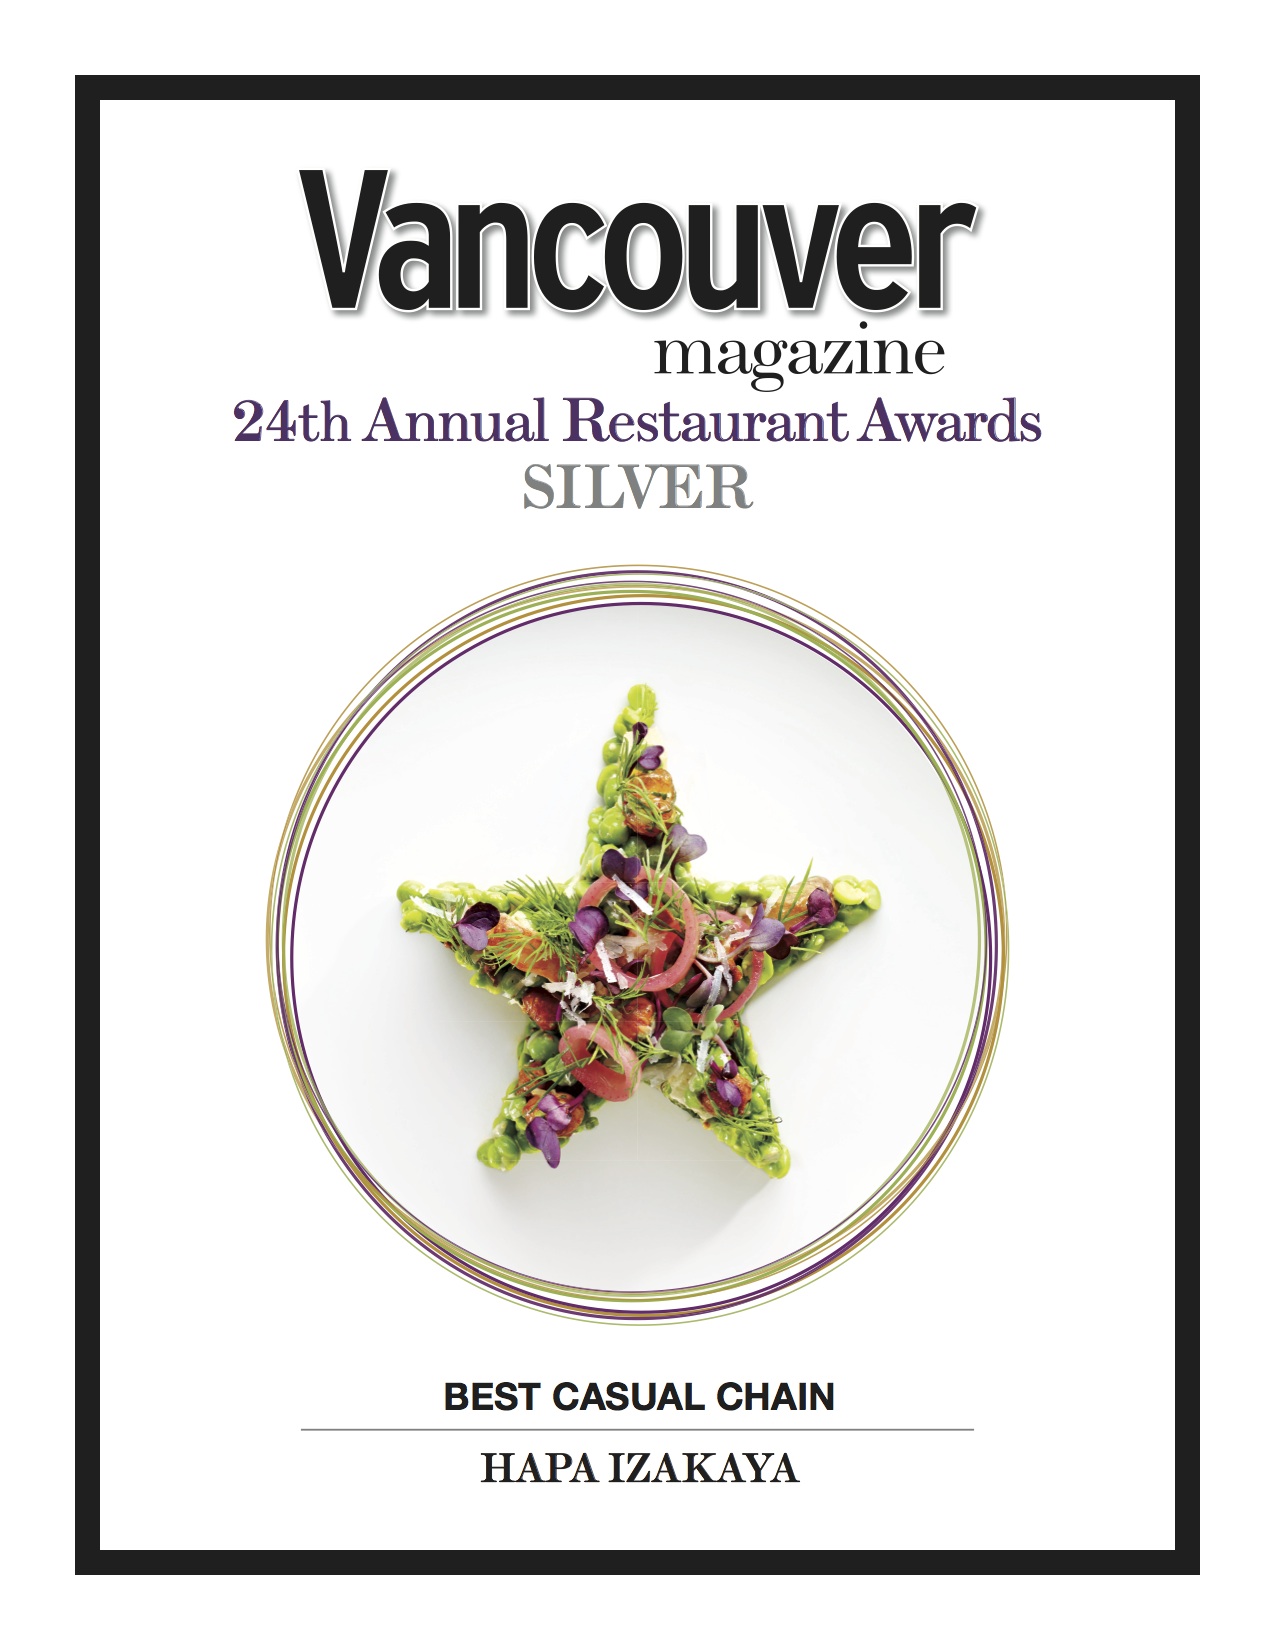 Best Casual Chain Winner Vancouver Magazine Restaurant Awards Hapa